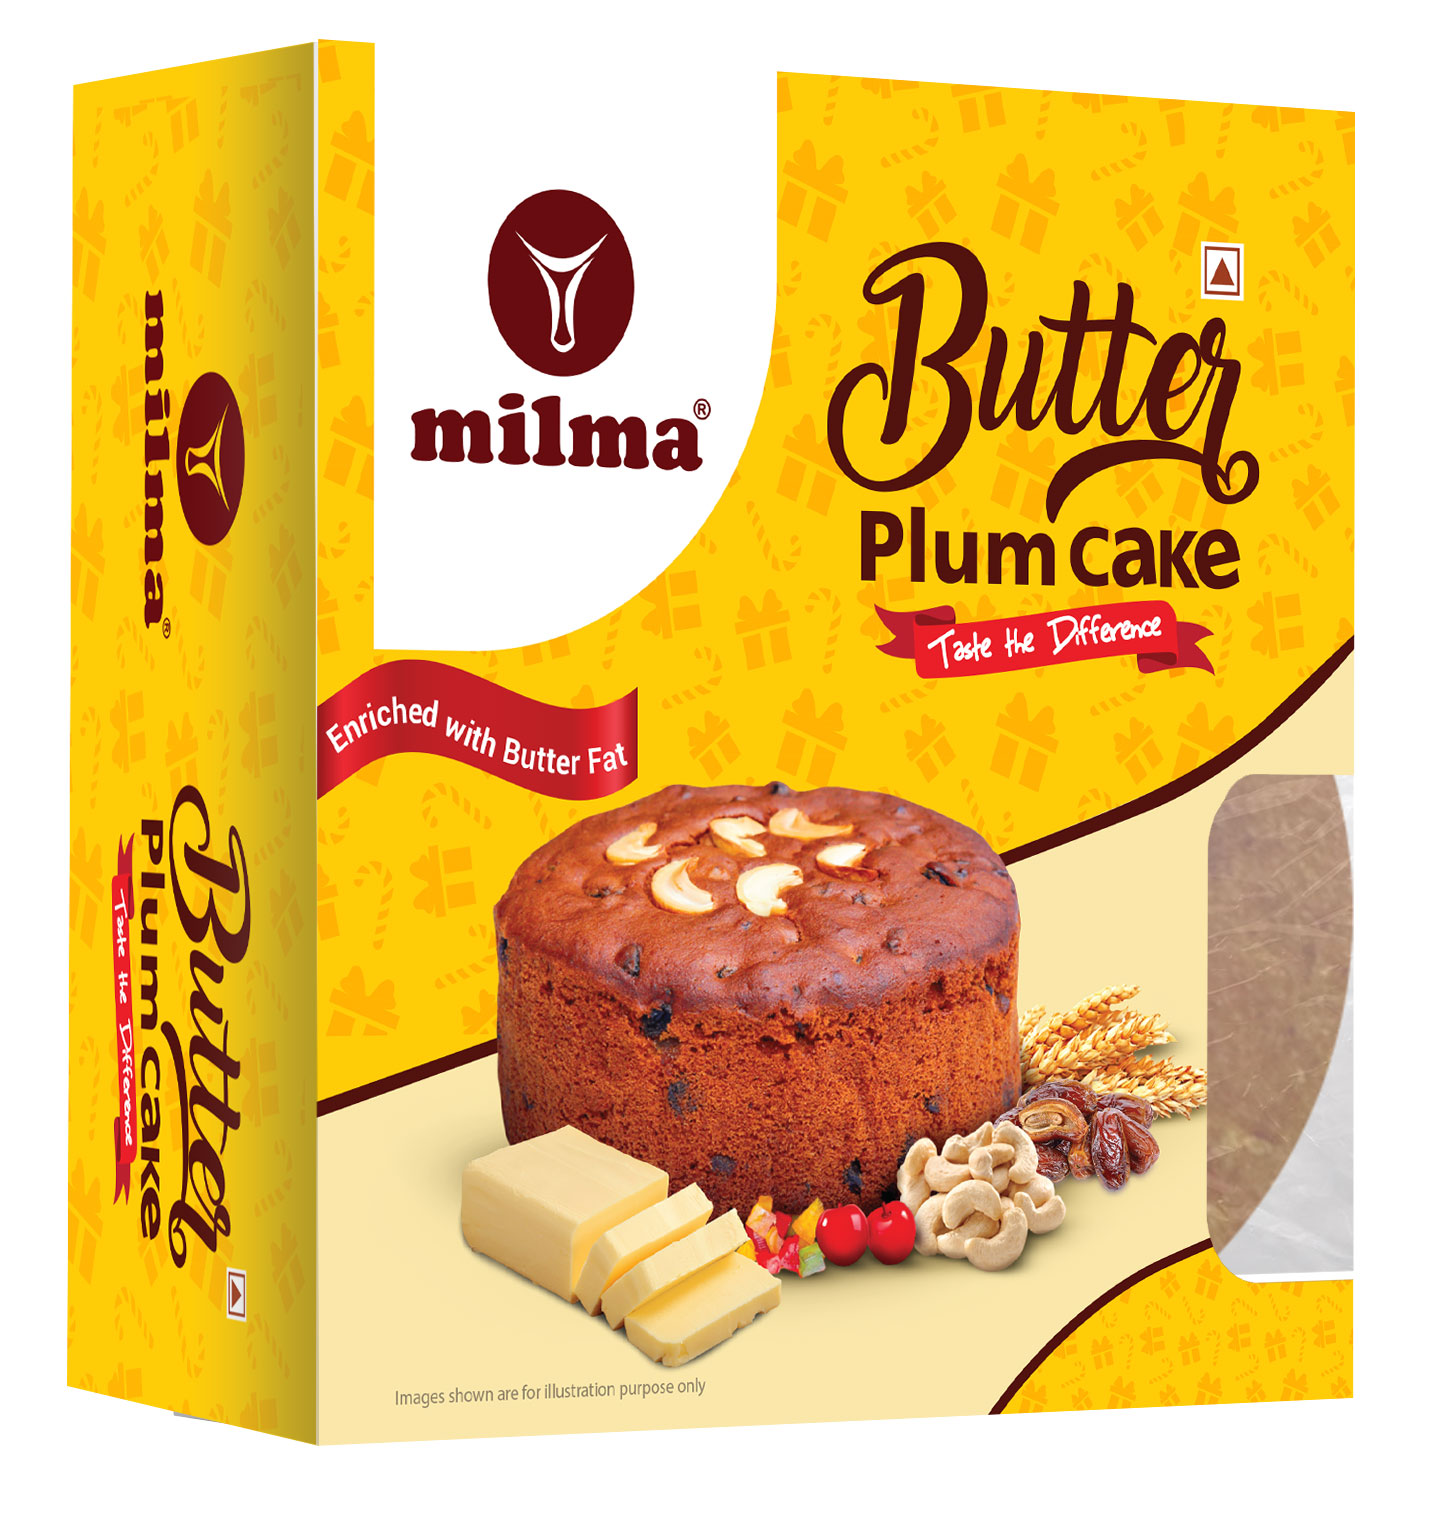 Milma Butter Plum Cake